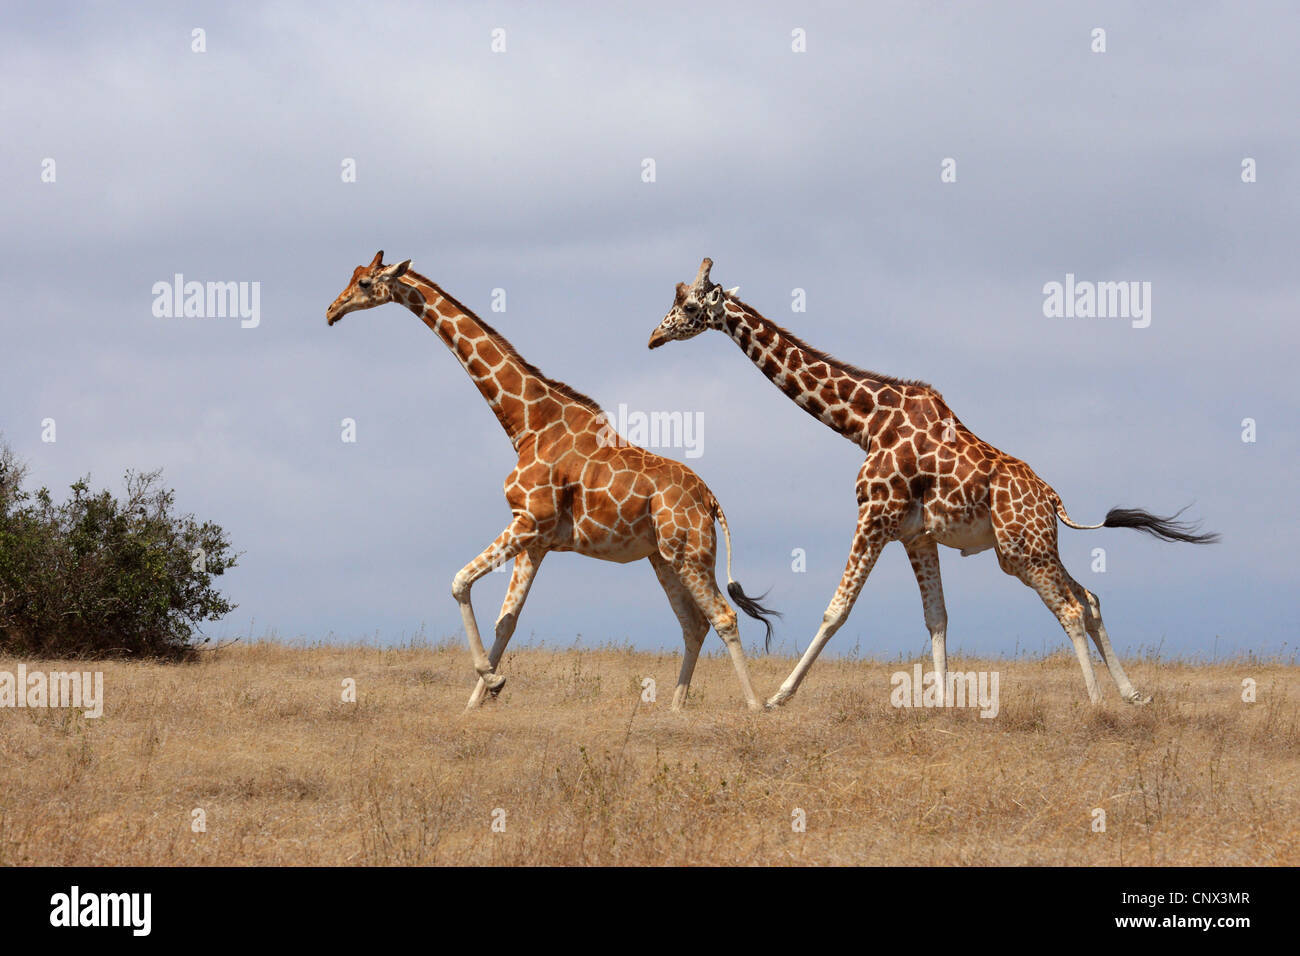 Jirafa reticulada (Giraffa camelopardalis reticulata), dos jirafas corriendo a través de la sabana, Kenya, Sweetwater Game Reserve Foto de stock